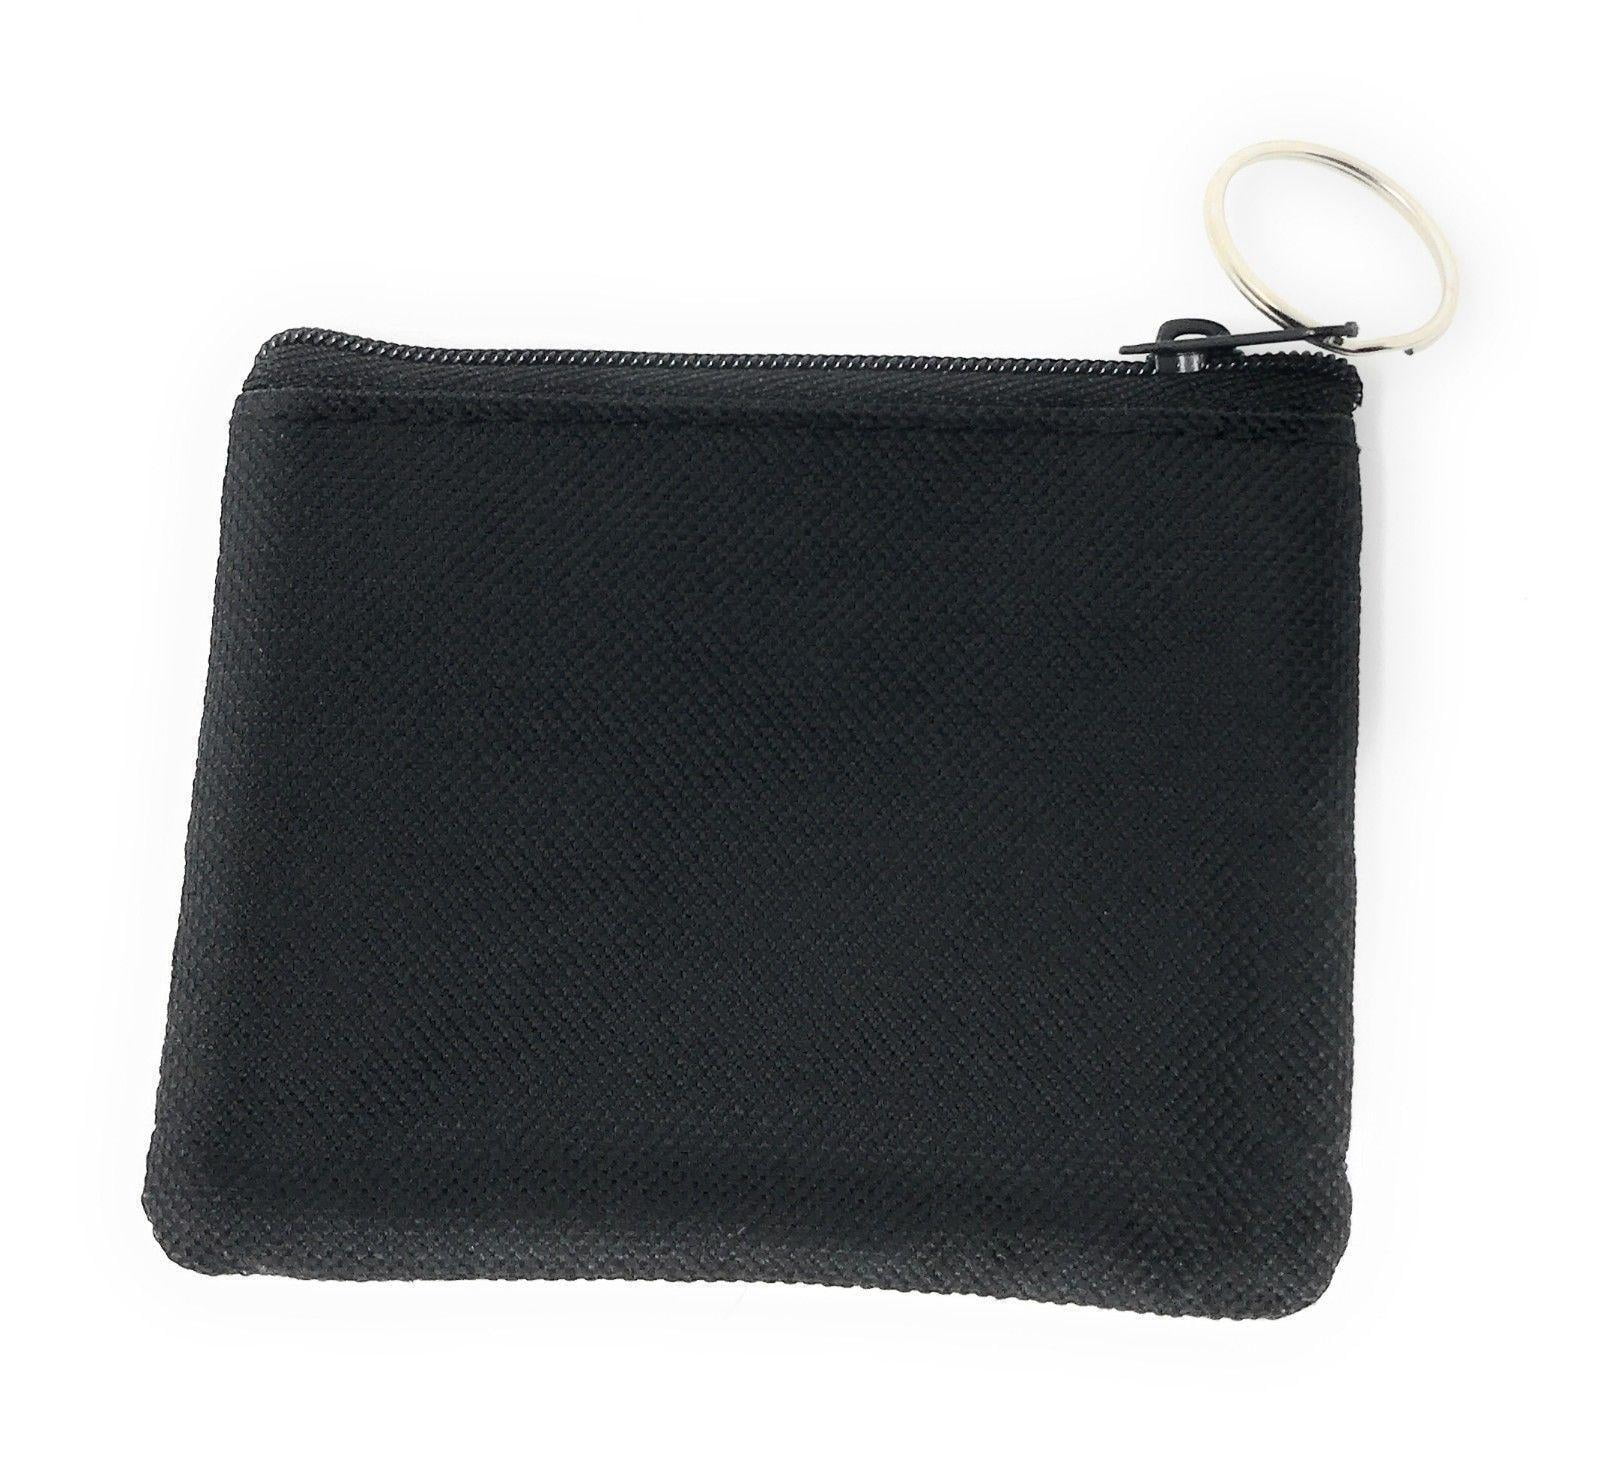 Tebru Key Row Wallet Leather Bag Hardware Key Ring Row Organizer Holder 6  Hooks Clasp Clip, Keyring, DIY Key Holders 